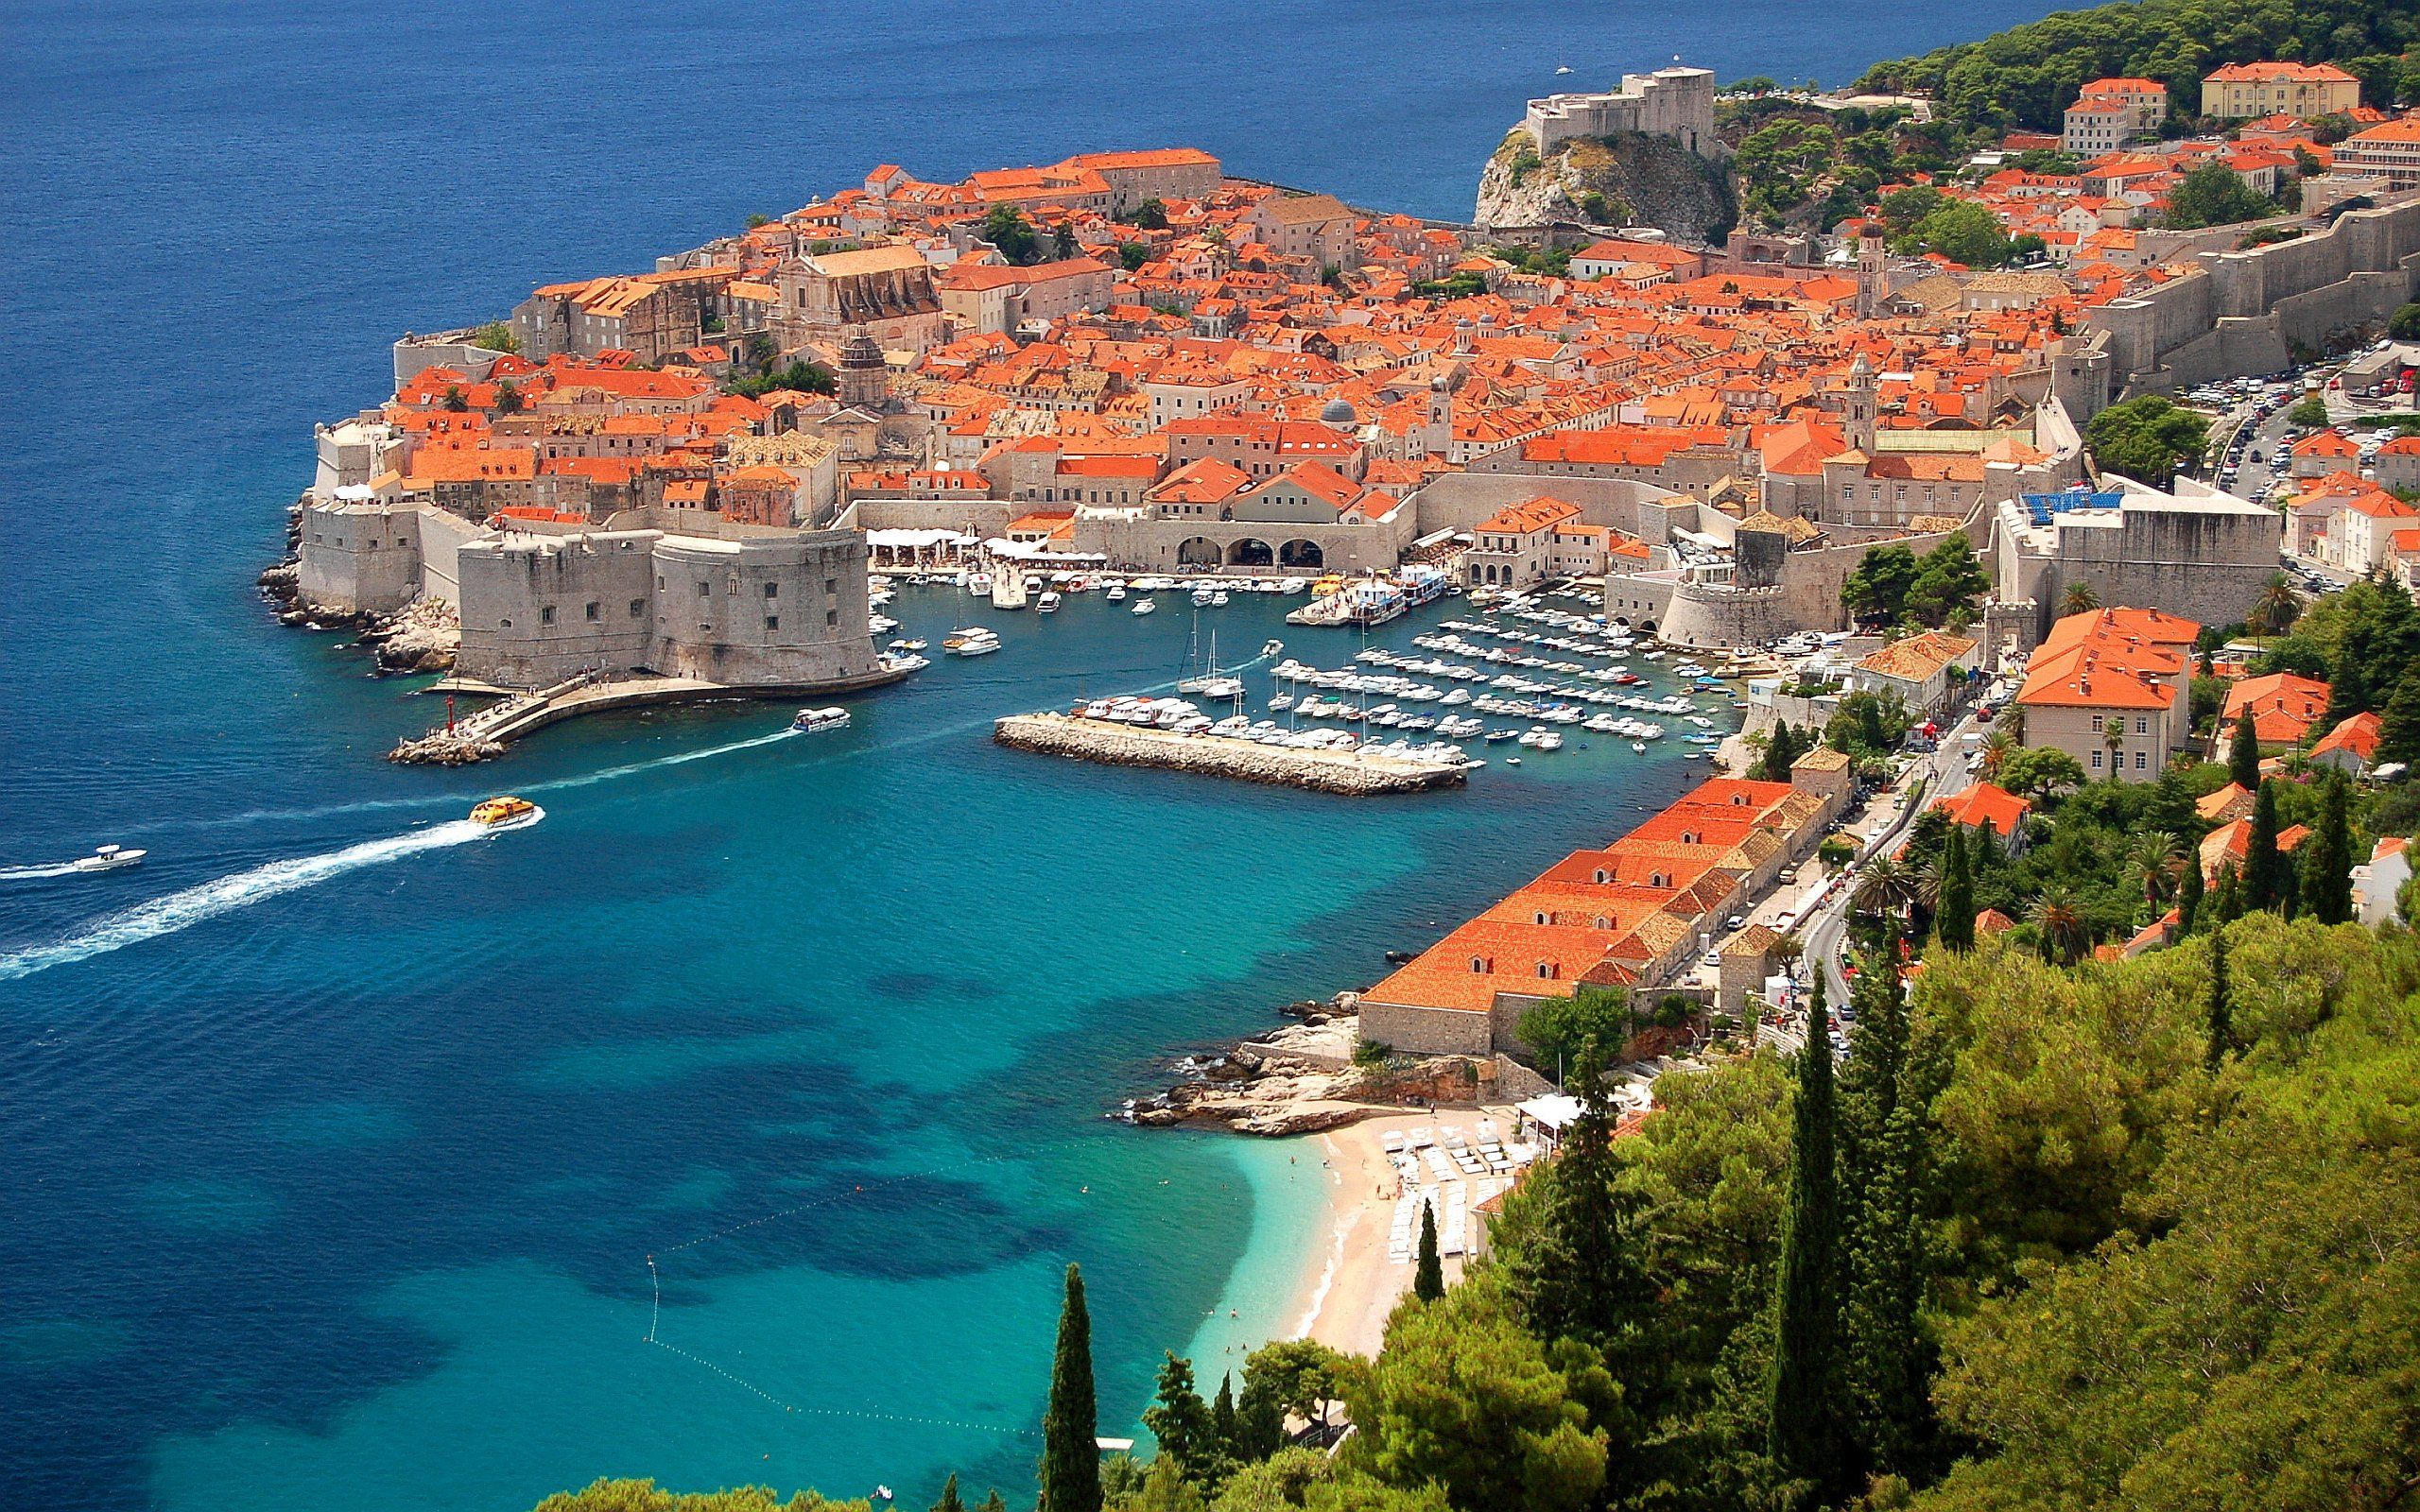 You are currently viewing Optiuni de cazare cu piscina si rating foarte bun in regiunea Dubrovnik, Croatia.